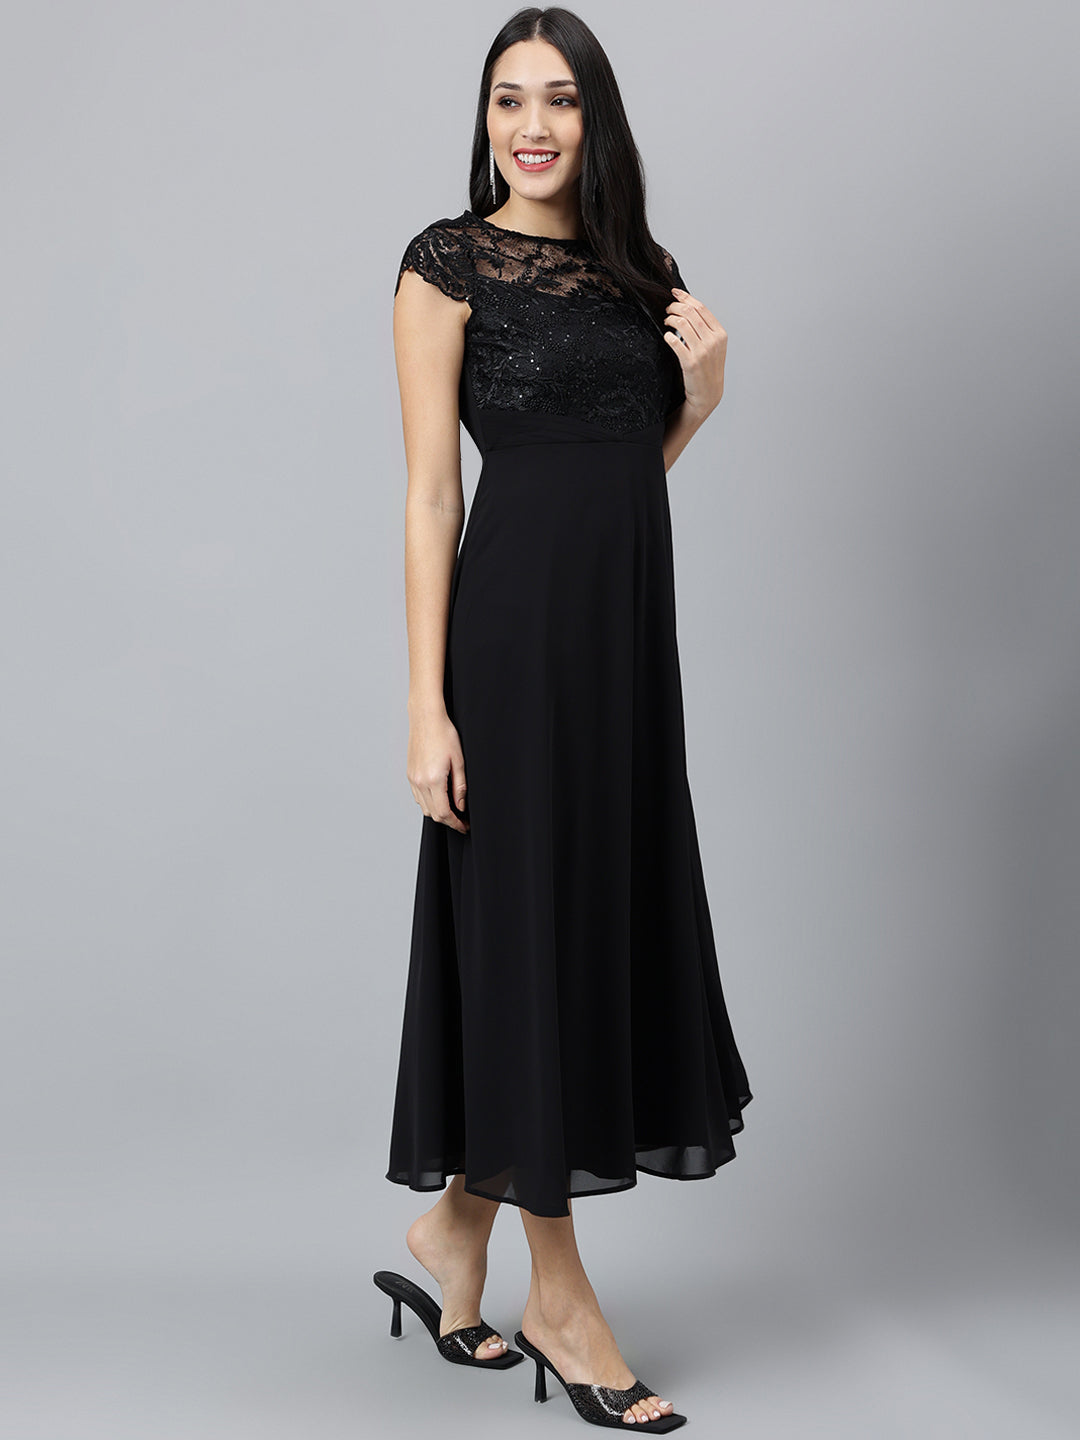 Black Solid Cap Sleeve Party Sequin Dress